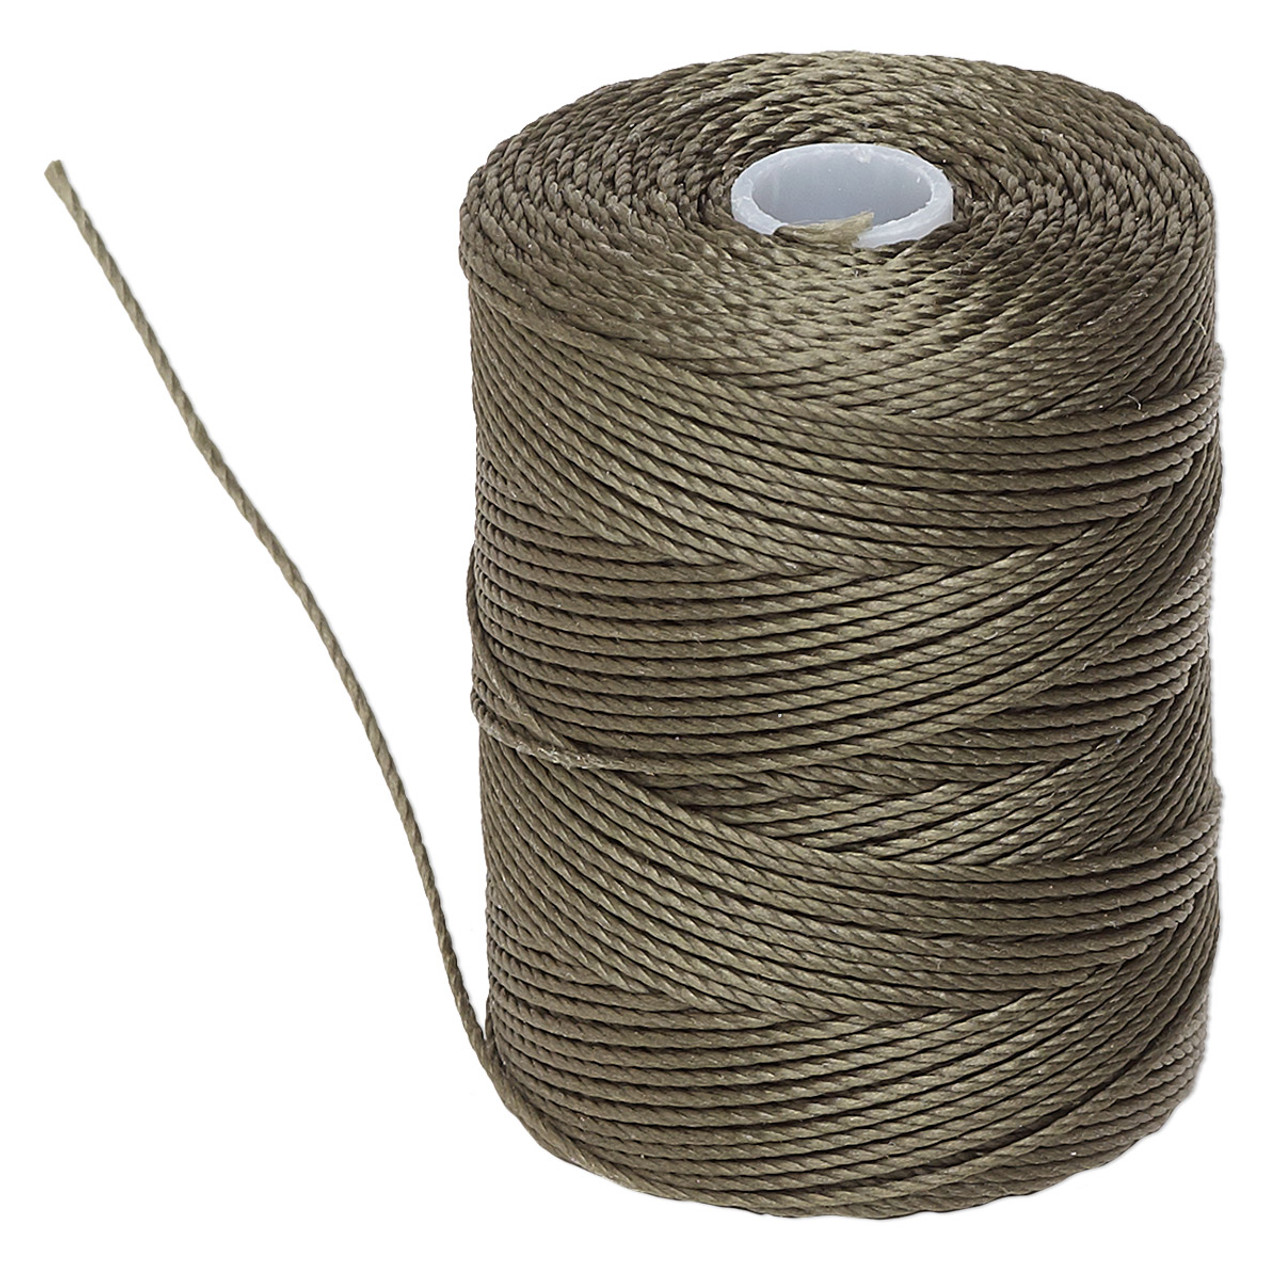 Thread, C-Lon®, nylon. 1 x Spool Size 0.5mm - 92yds (3-ply twisted) Brown